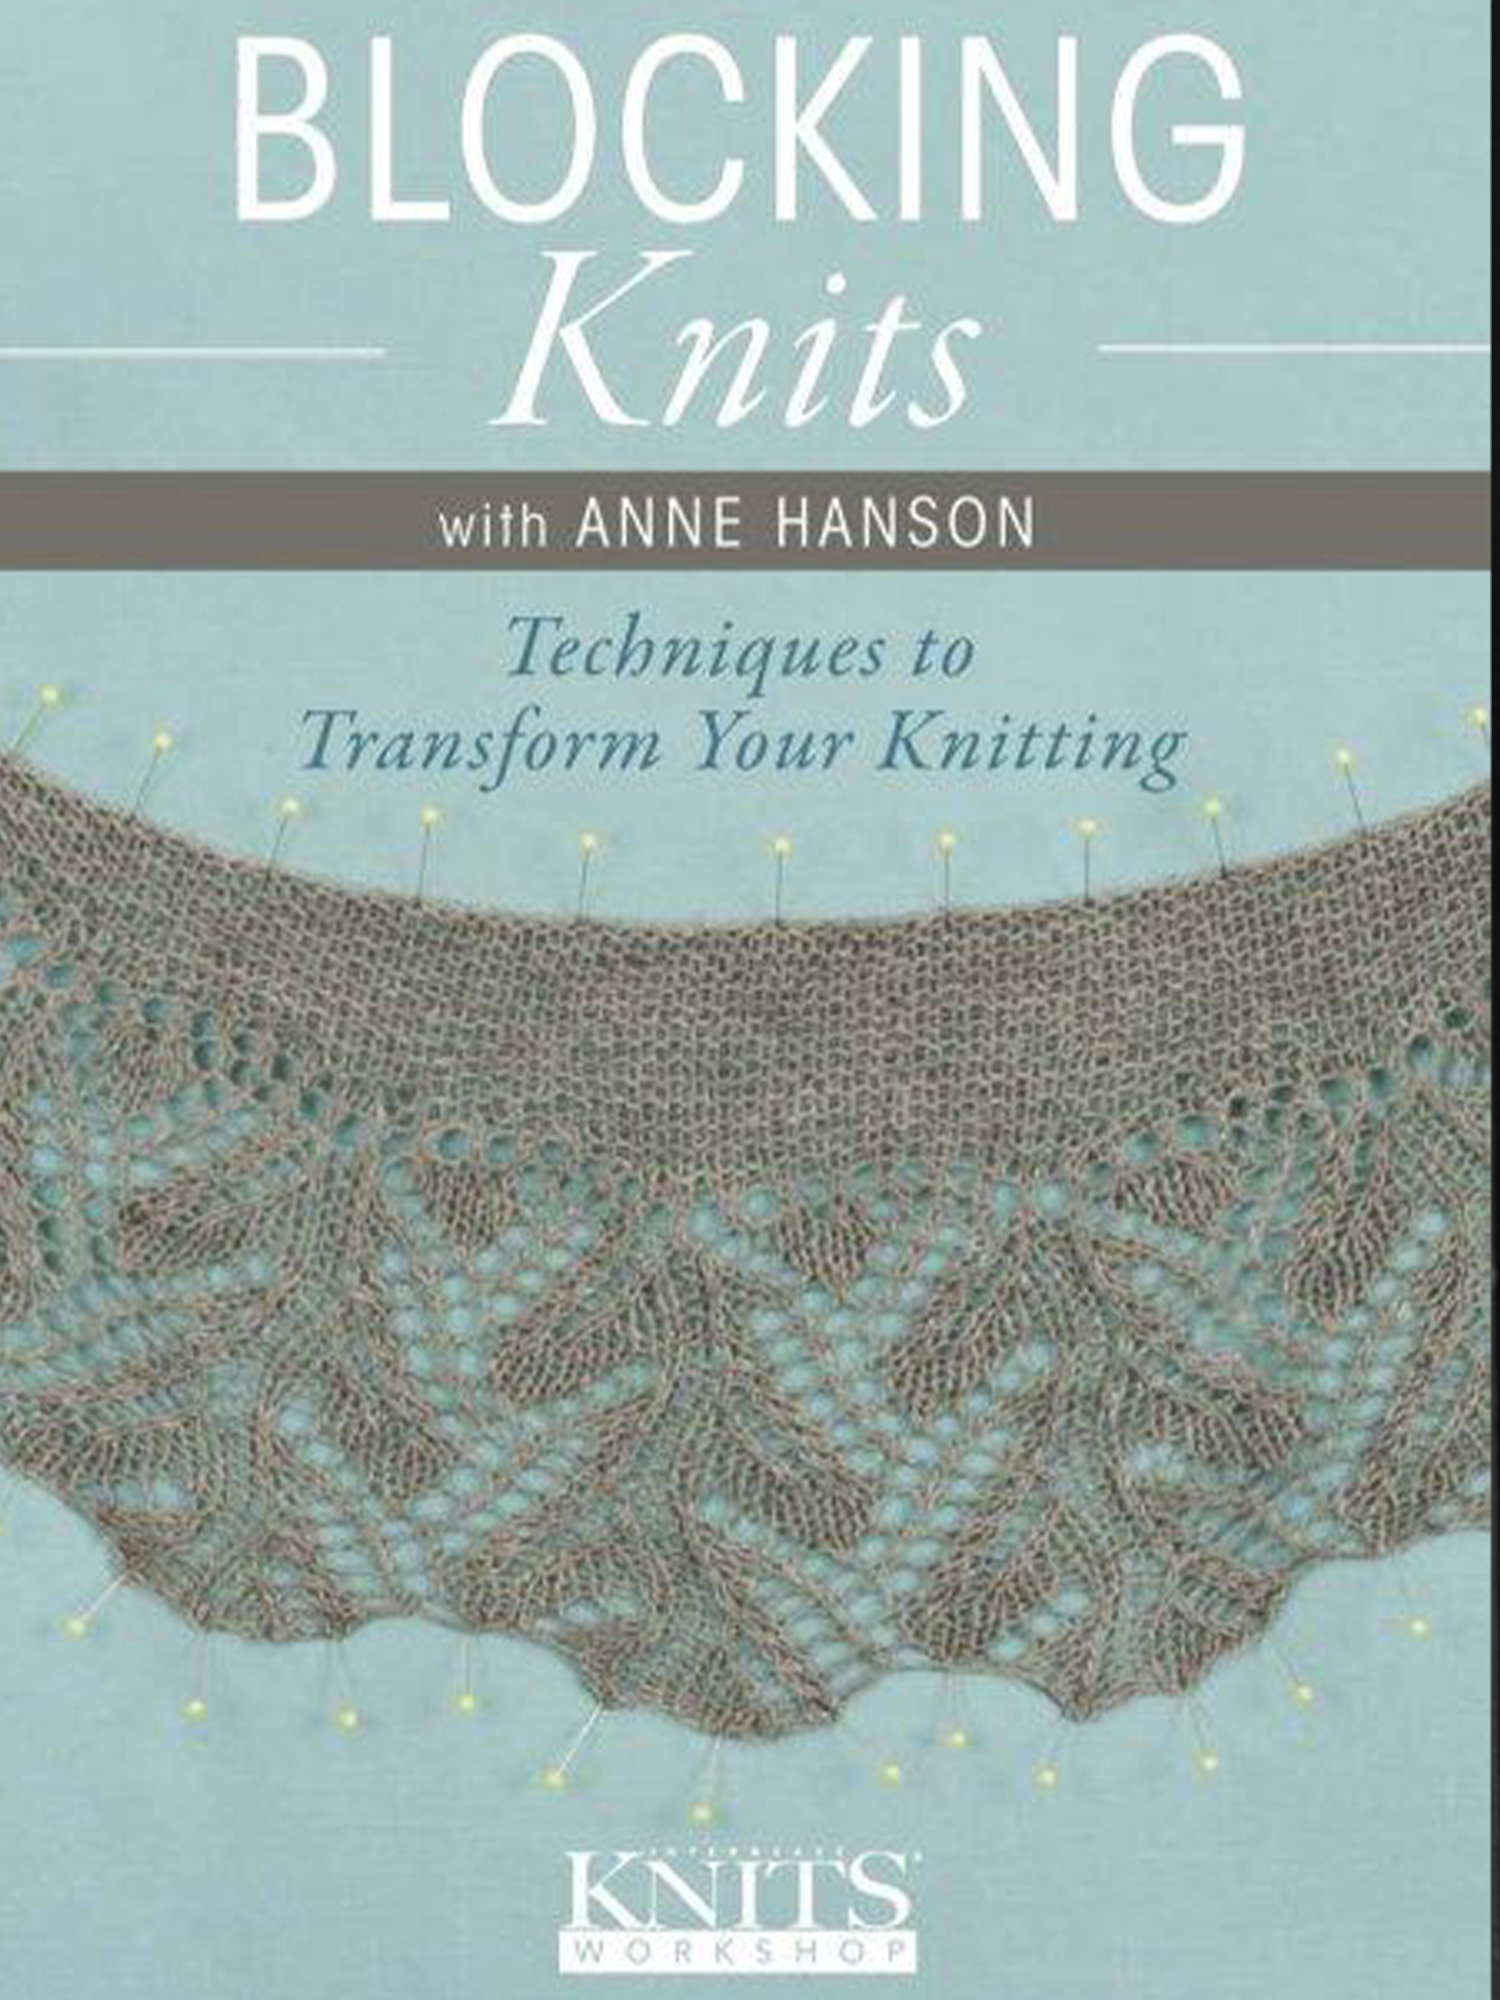 Blocking Knits with Anne Hanson DVD